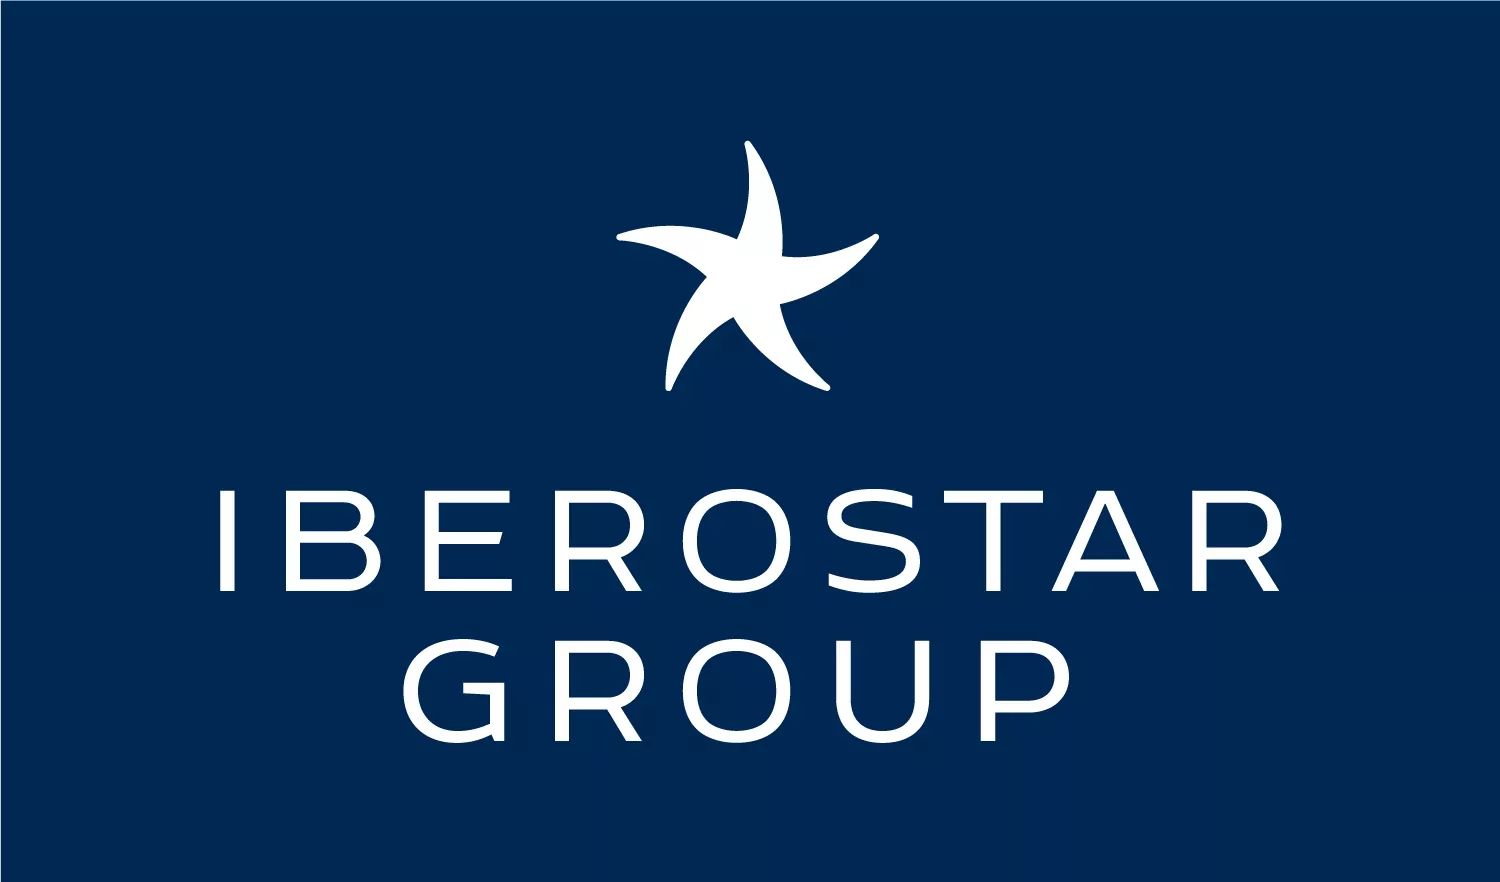 IBEROSTAR logo